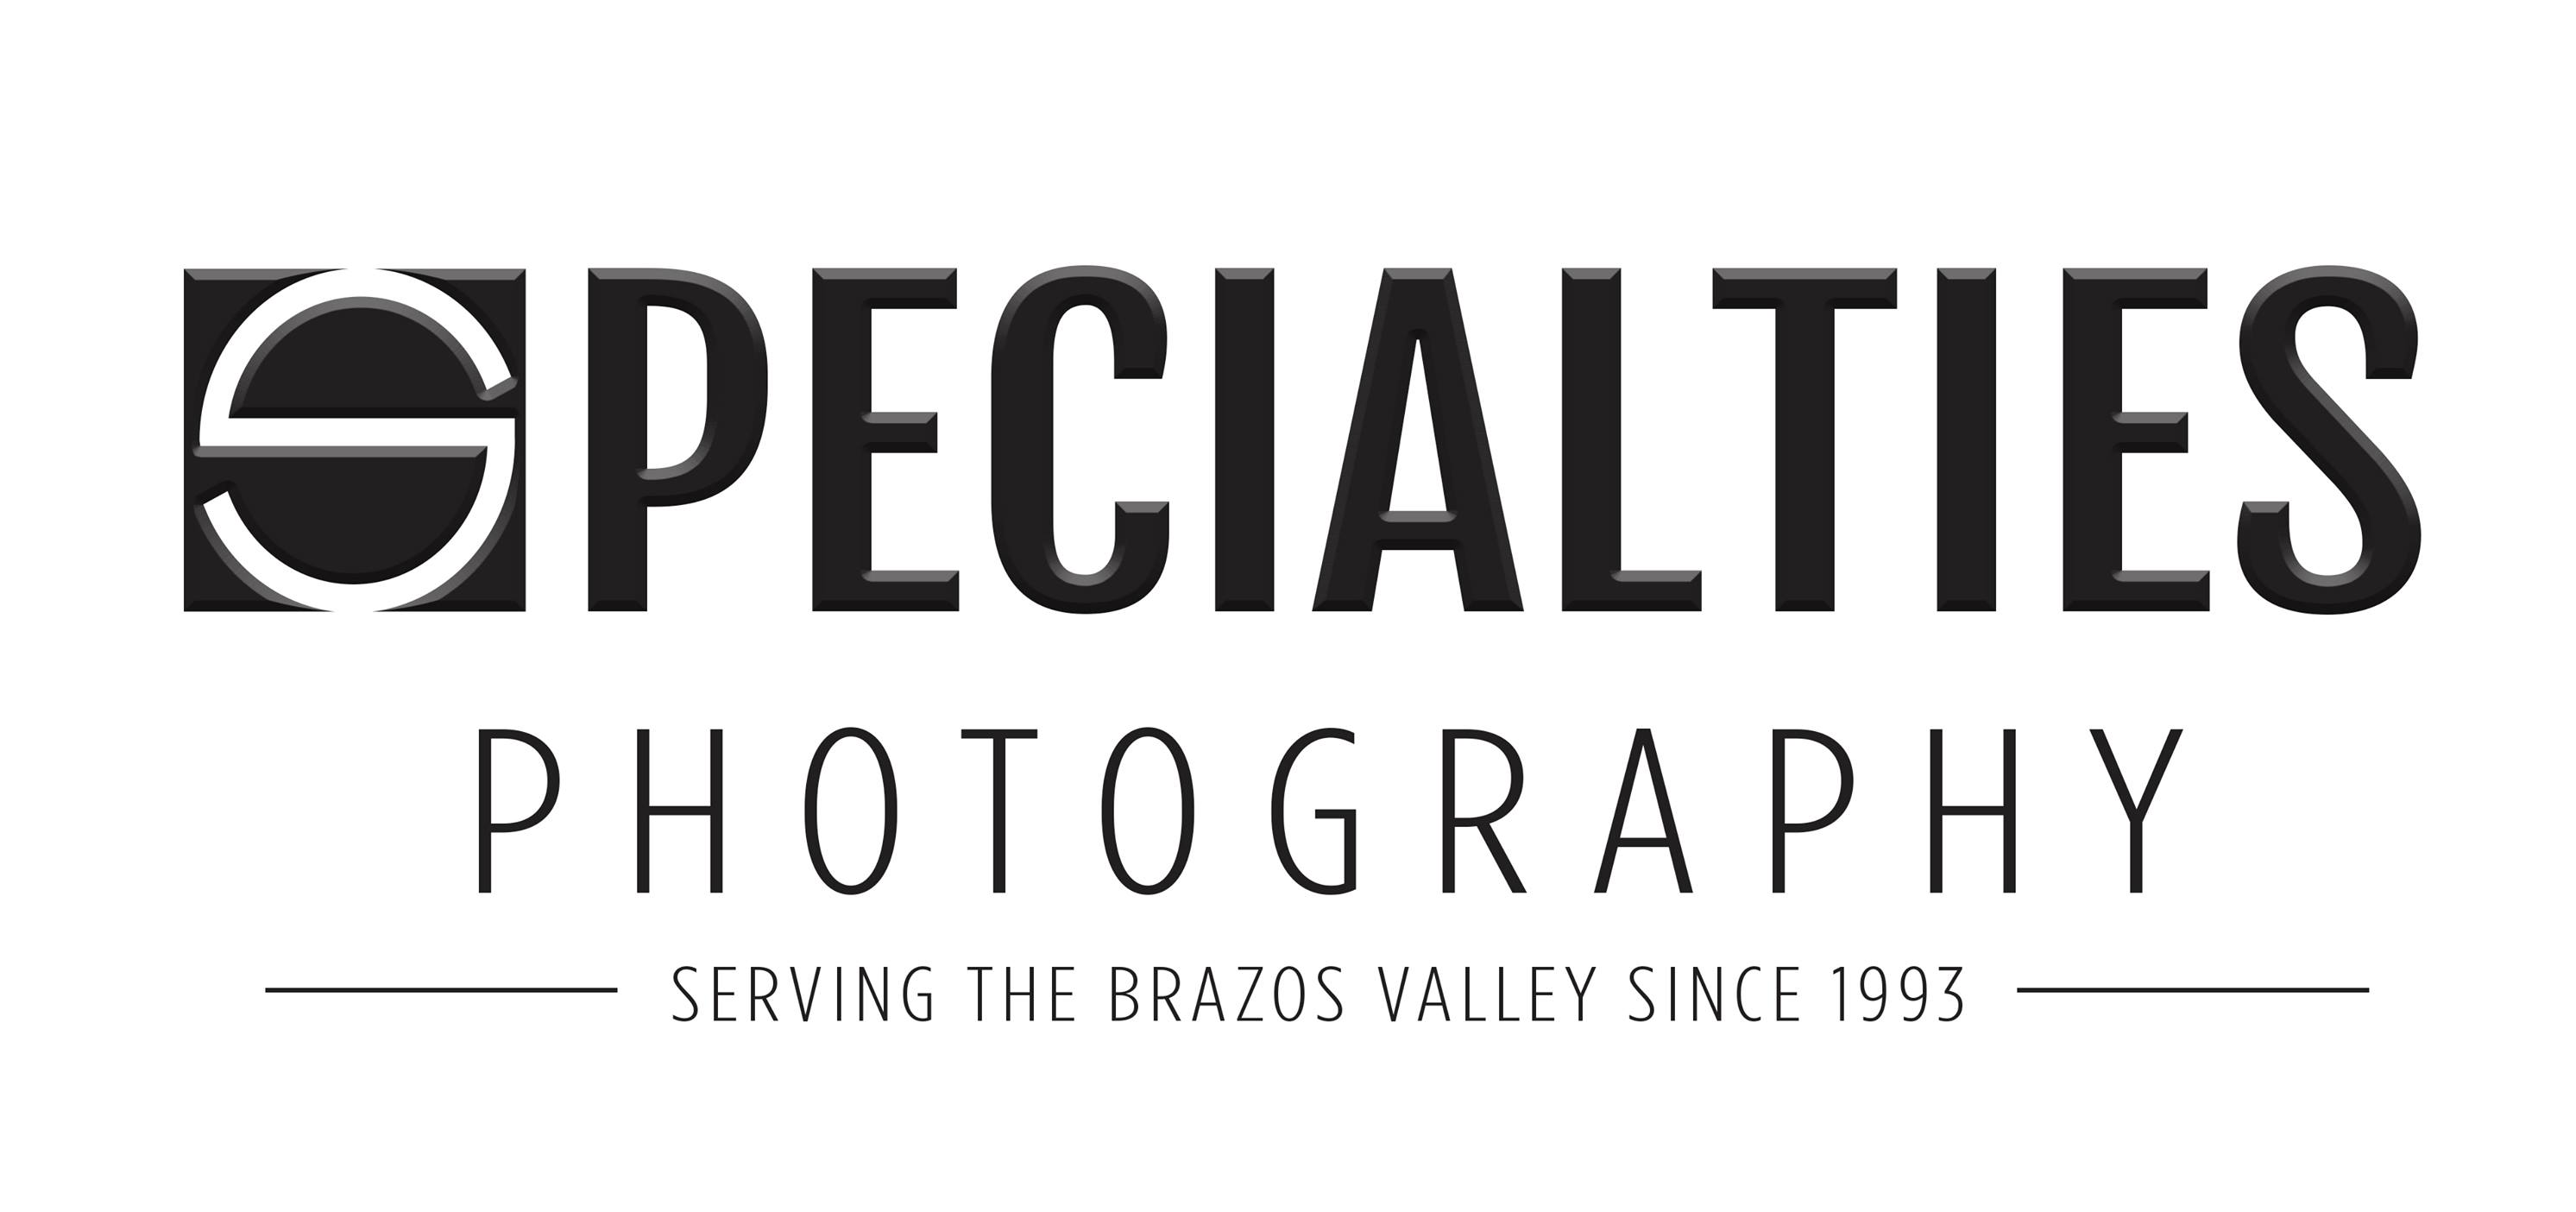 Specialties Photography